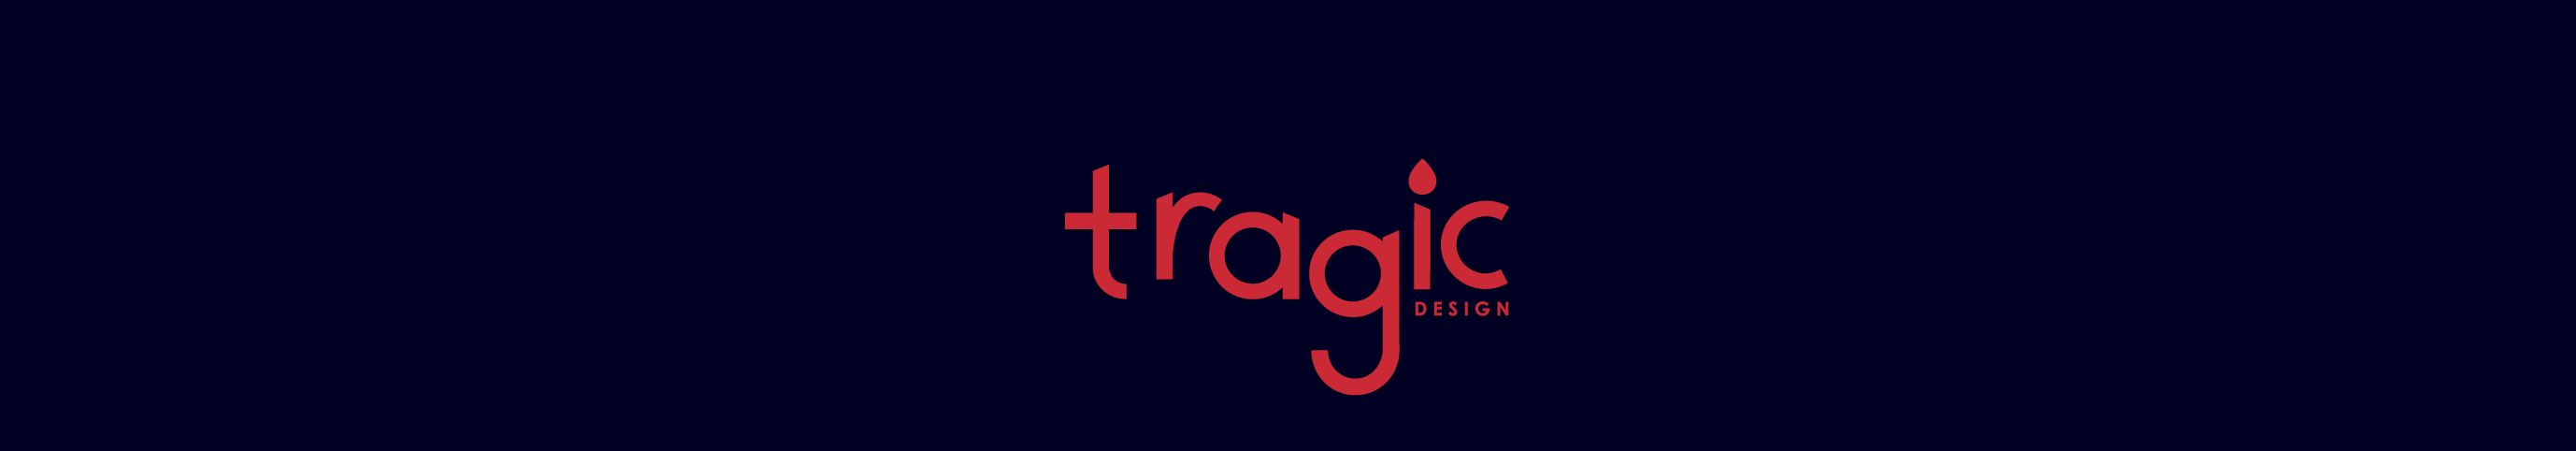 Tragic Design's profile banner